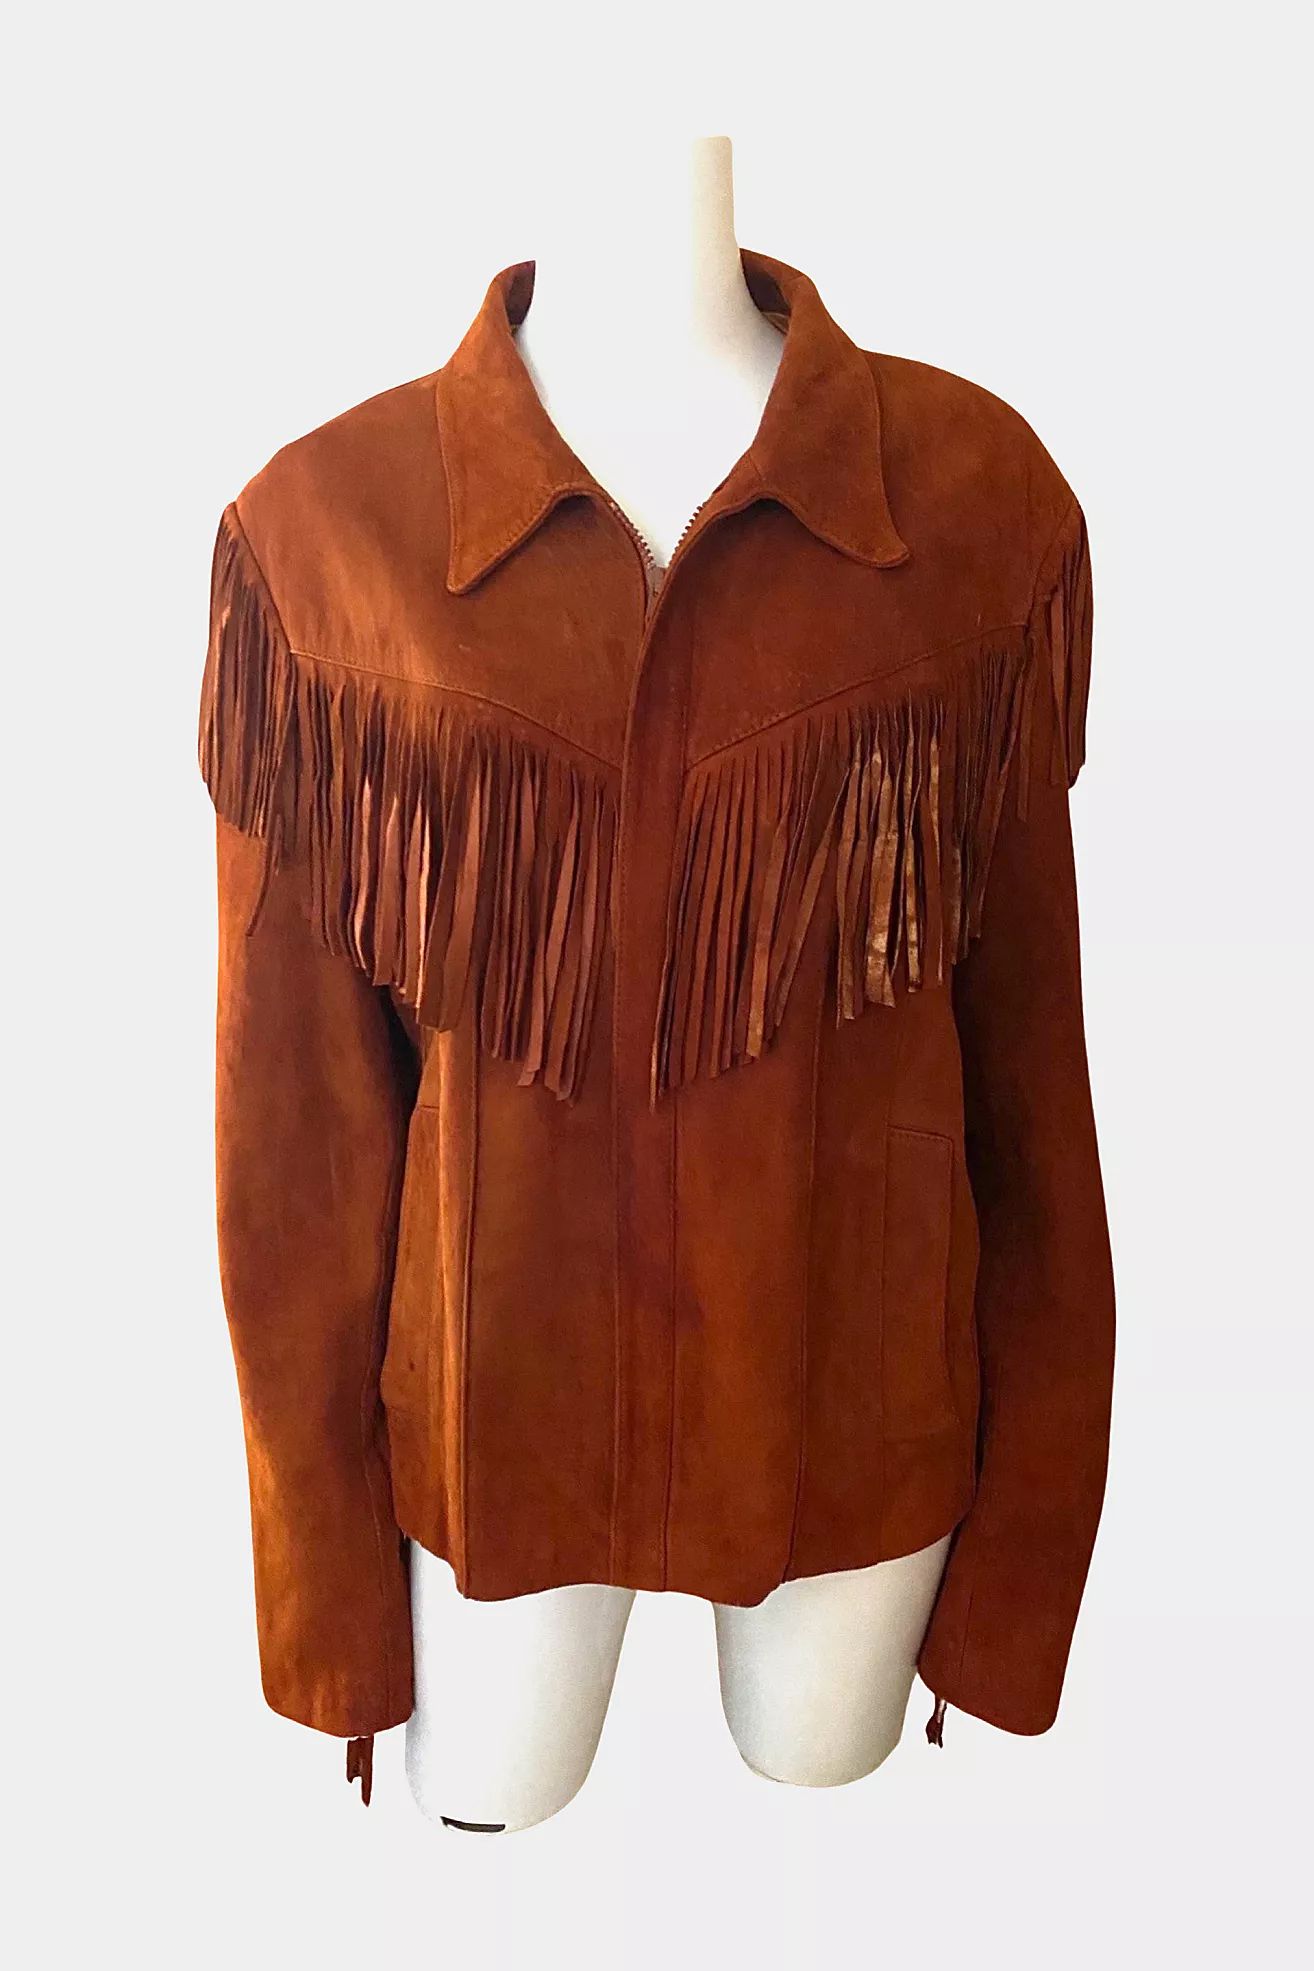 1970s Terracotta Western Fringe Suede Jacket Selected By Ritual Vintage | Free People (Global - UK&FR Excluded)